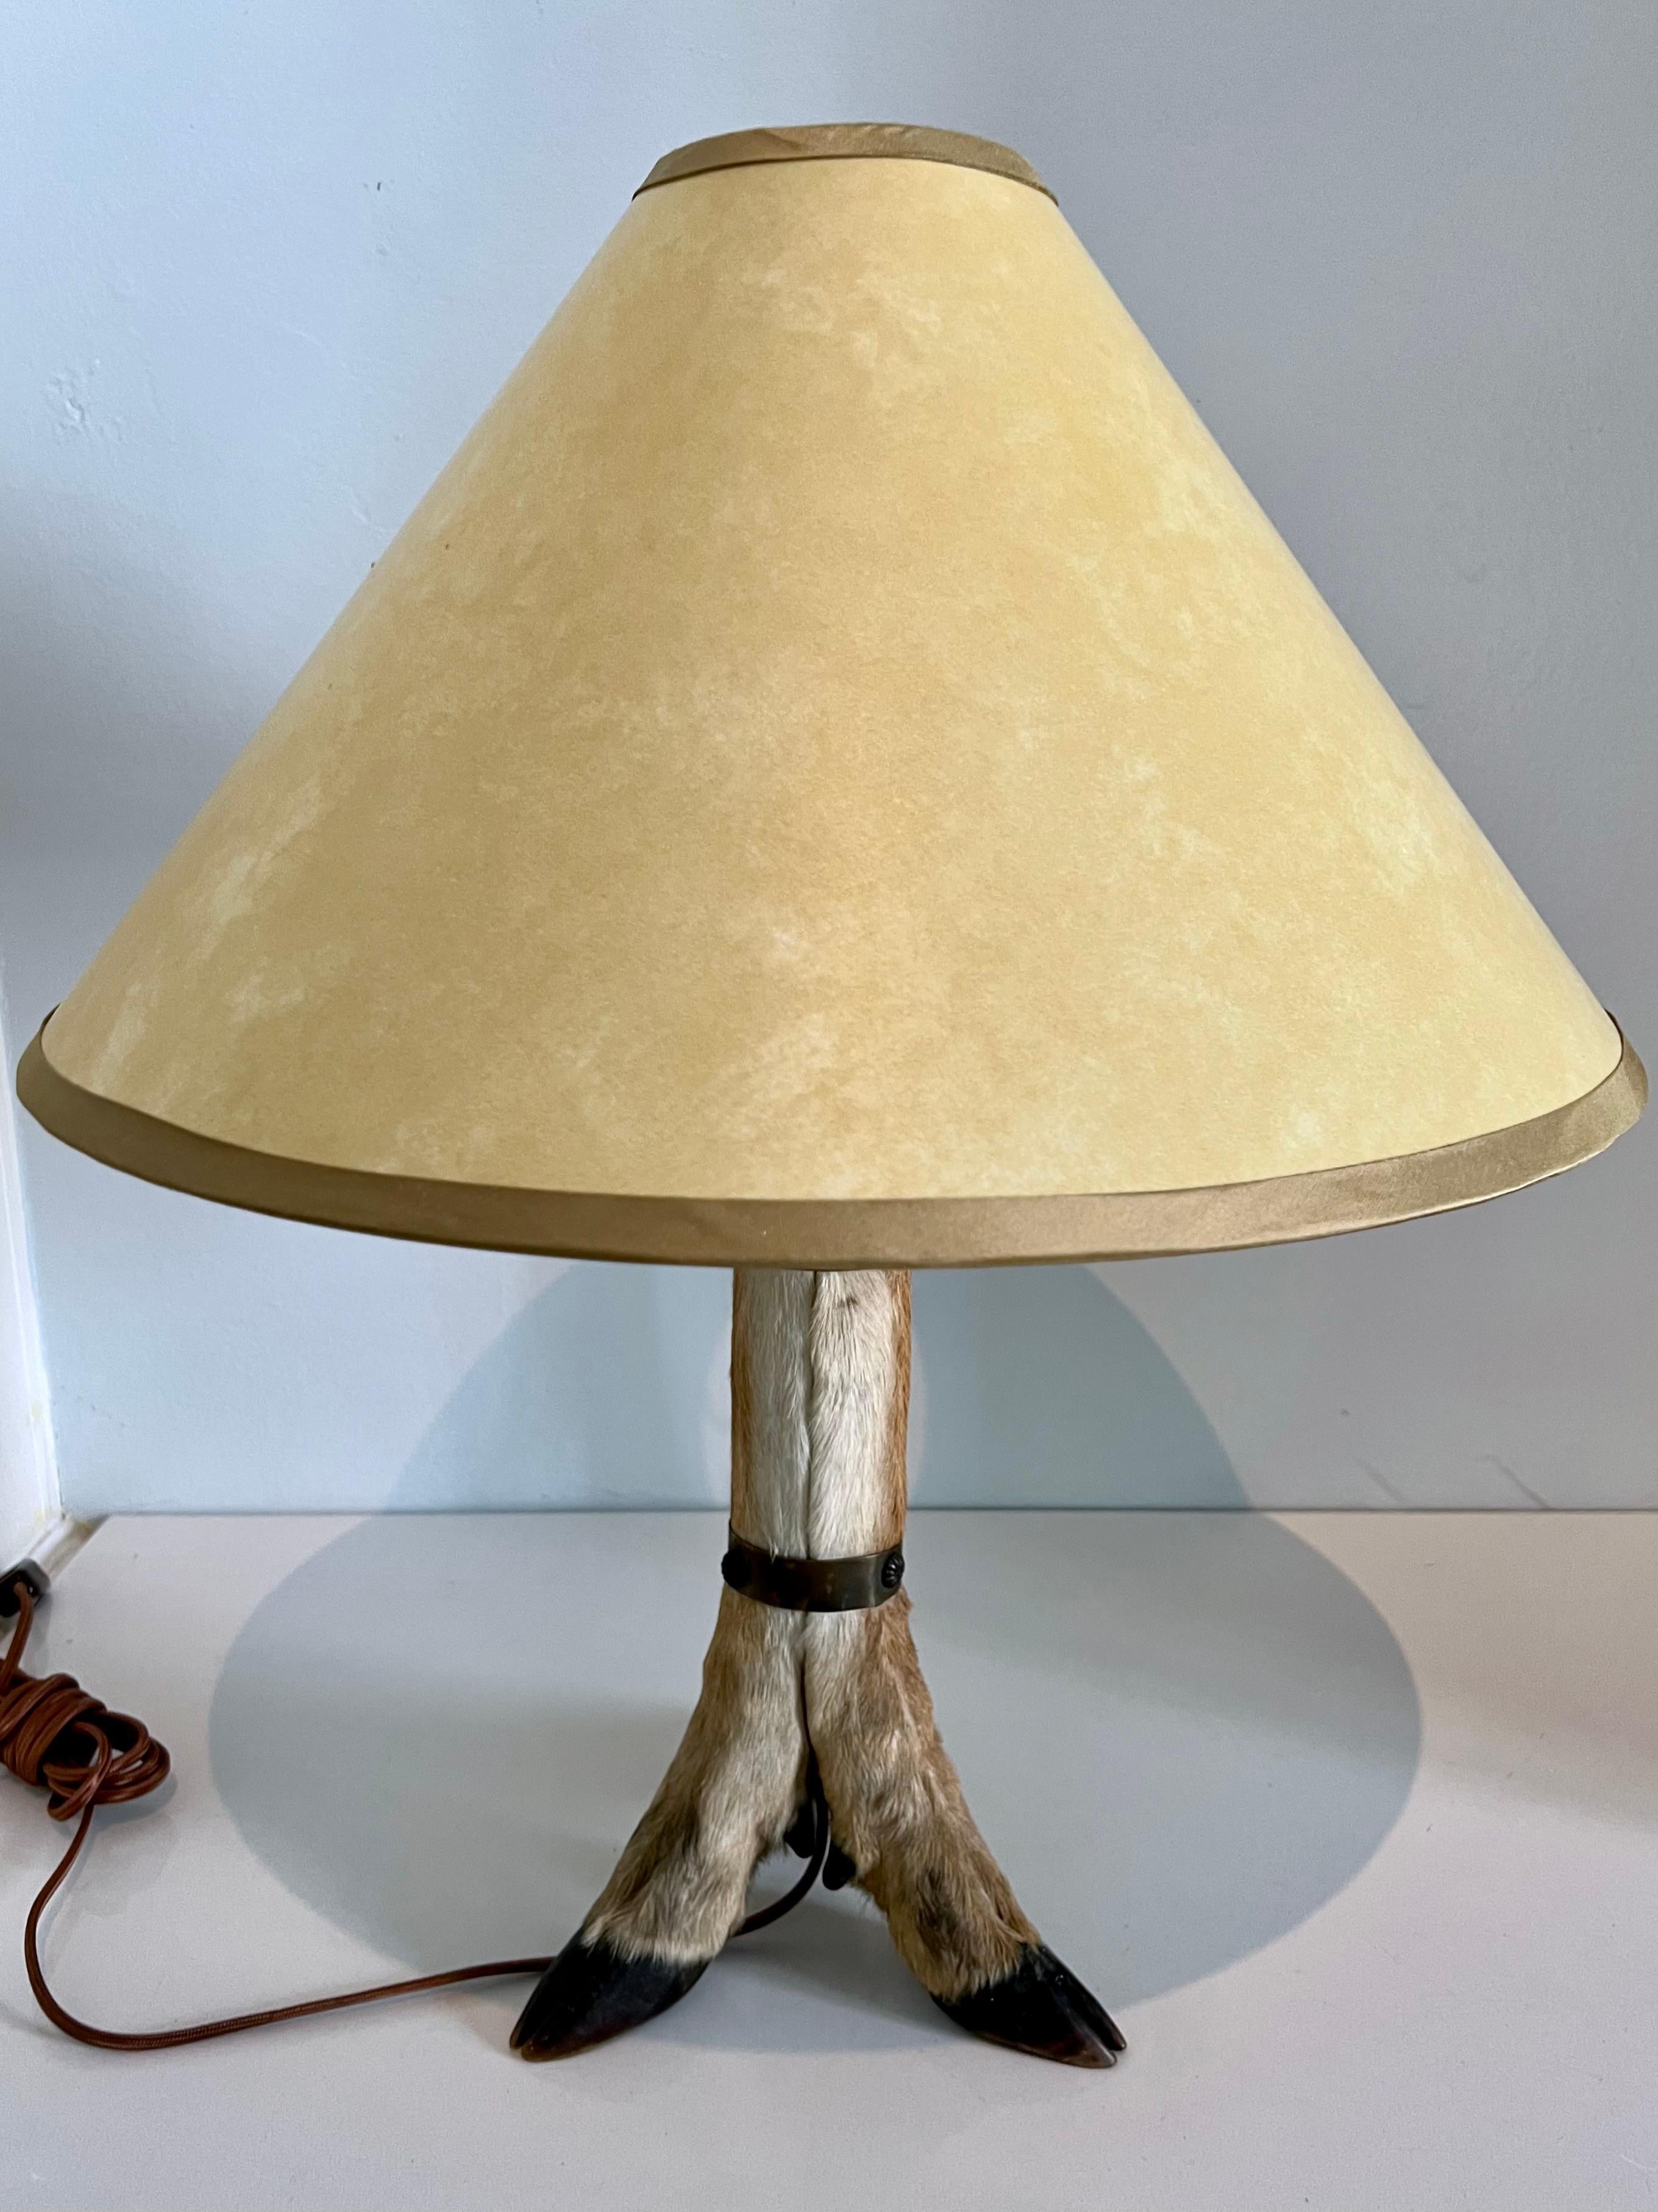 leg lamp for sale